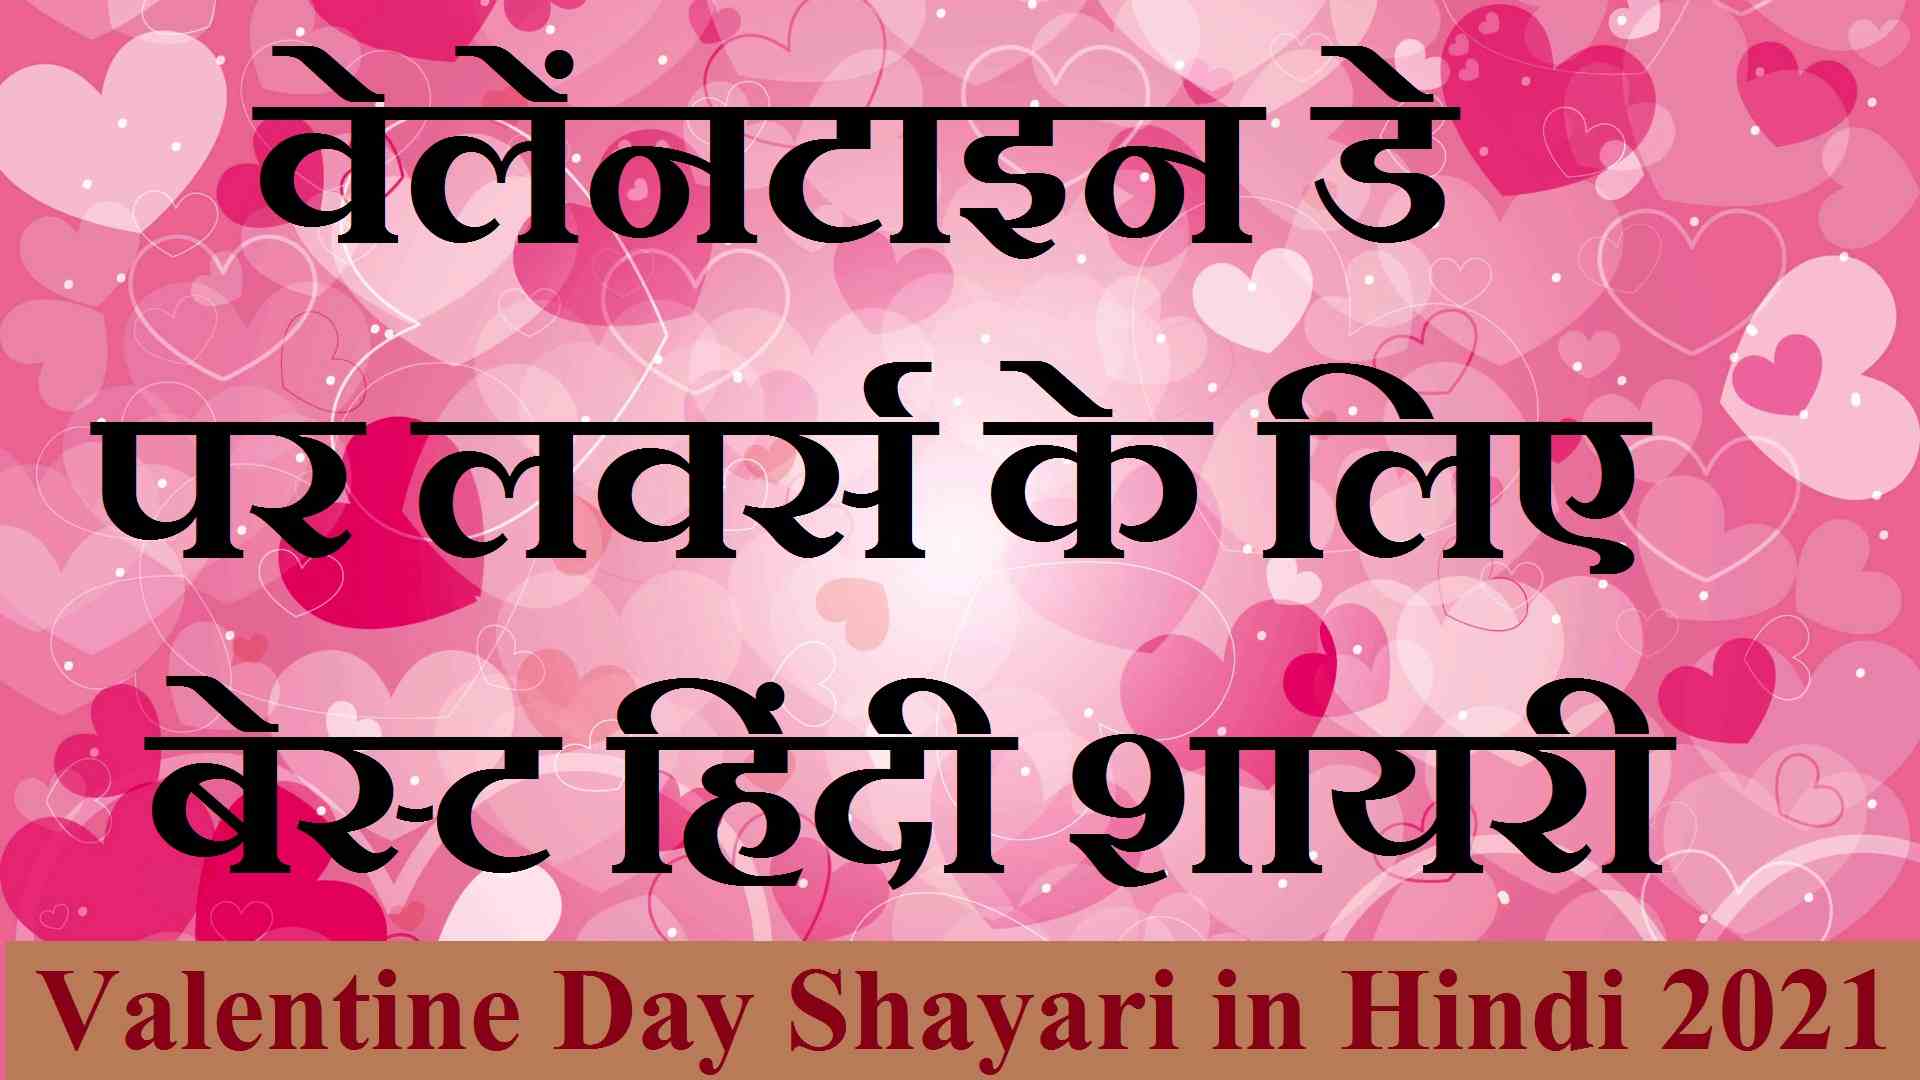 Valentine Day Shayari in Hindi 2021